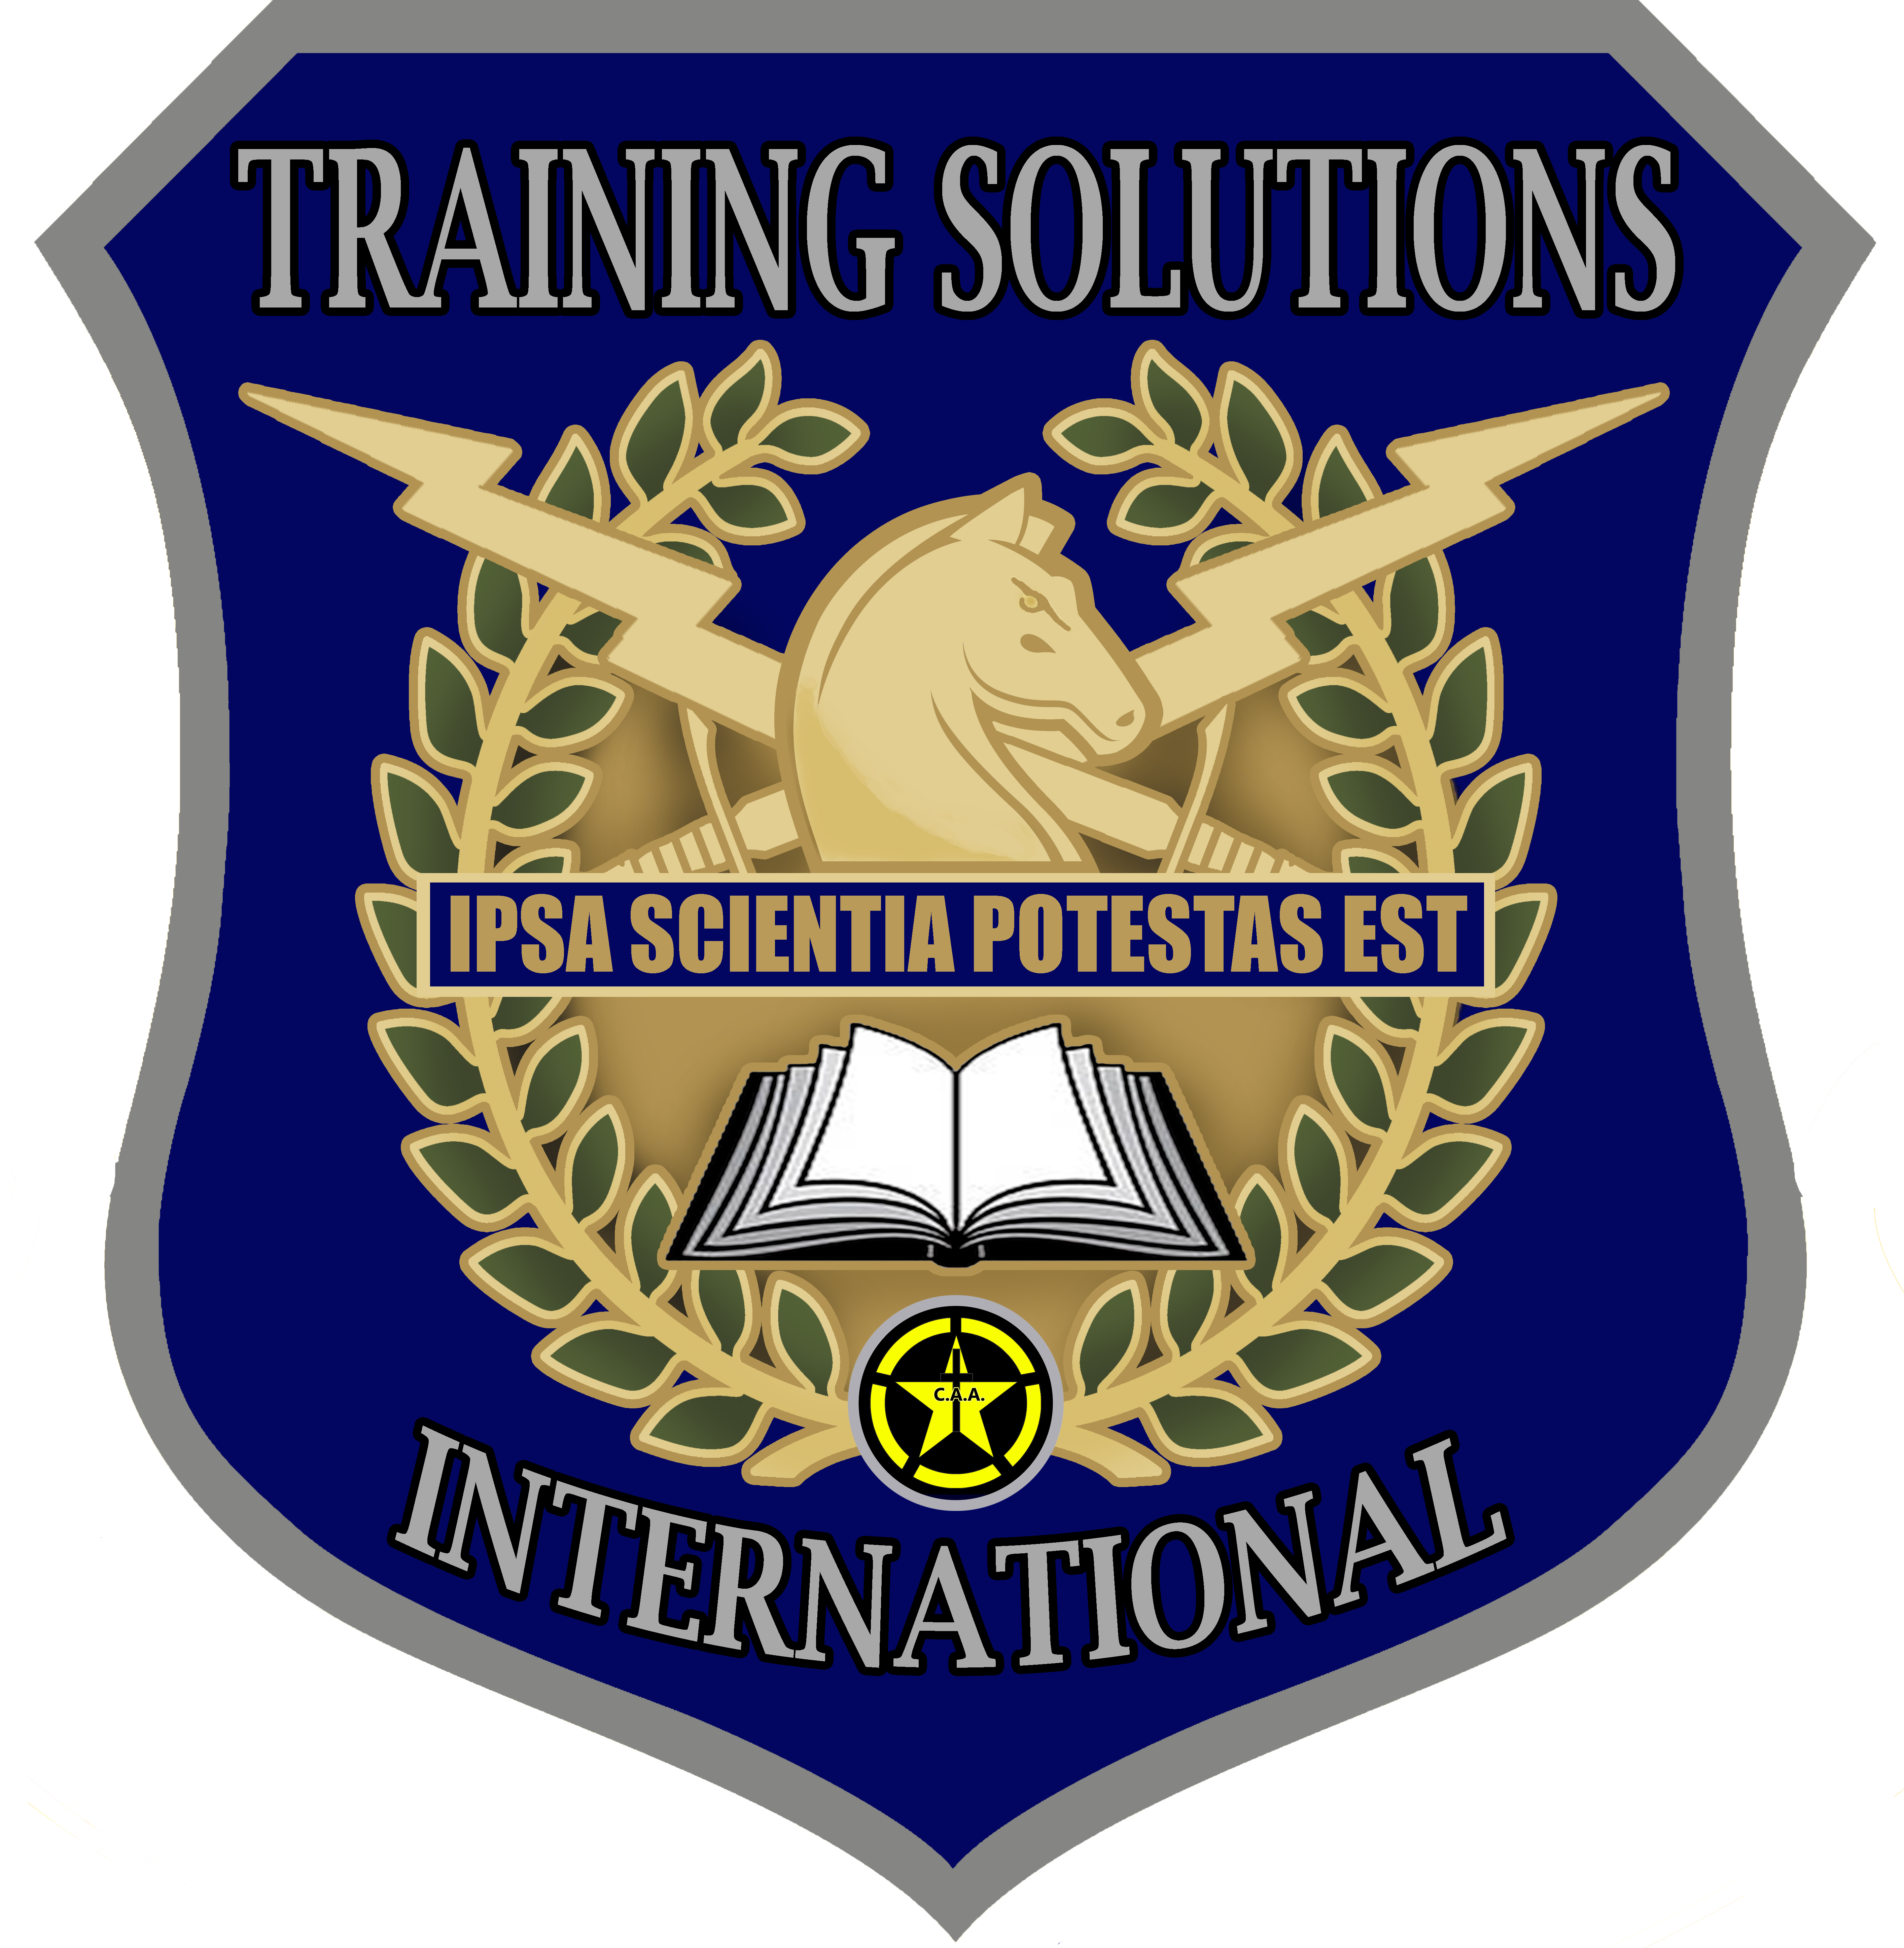 Training Solutions International company logo.